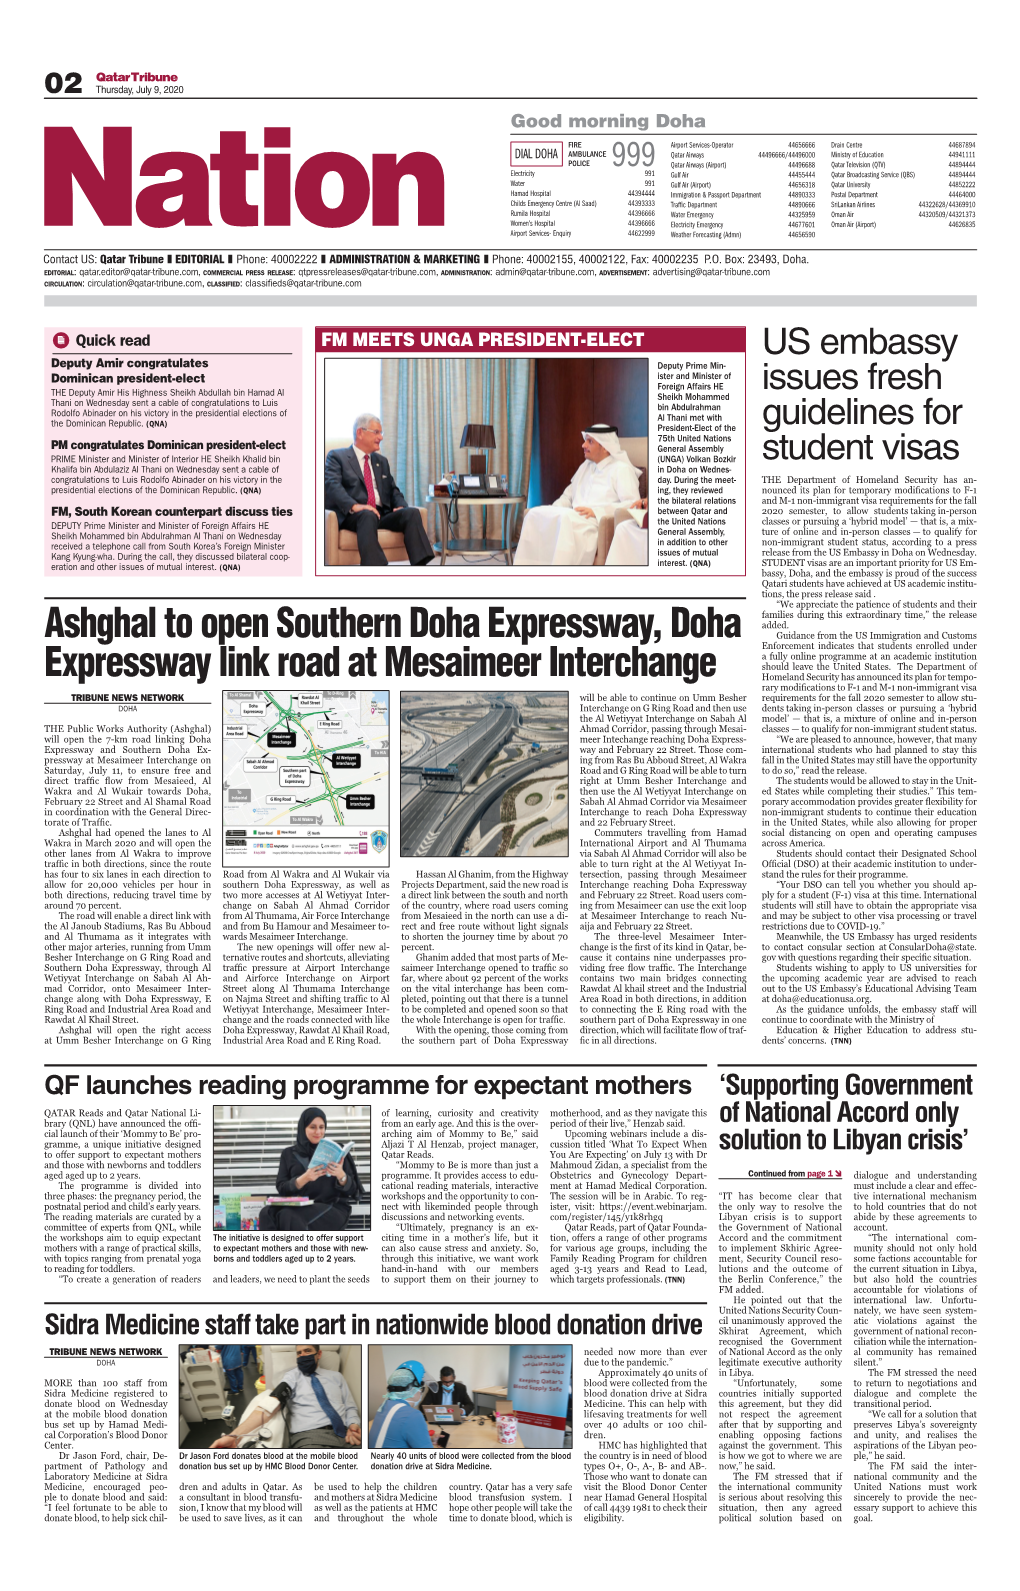 Ashghal to Open Southern Doha Expressway, Doha Expressway Link